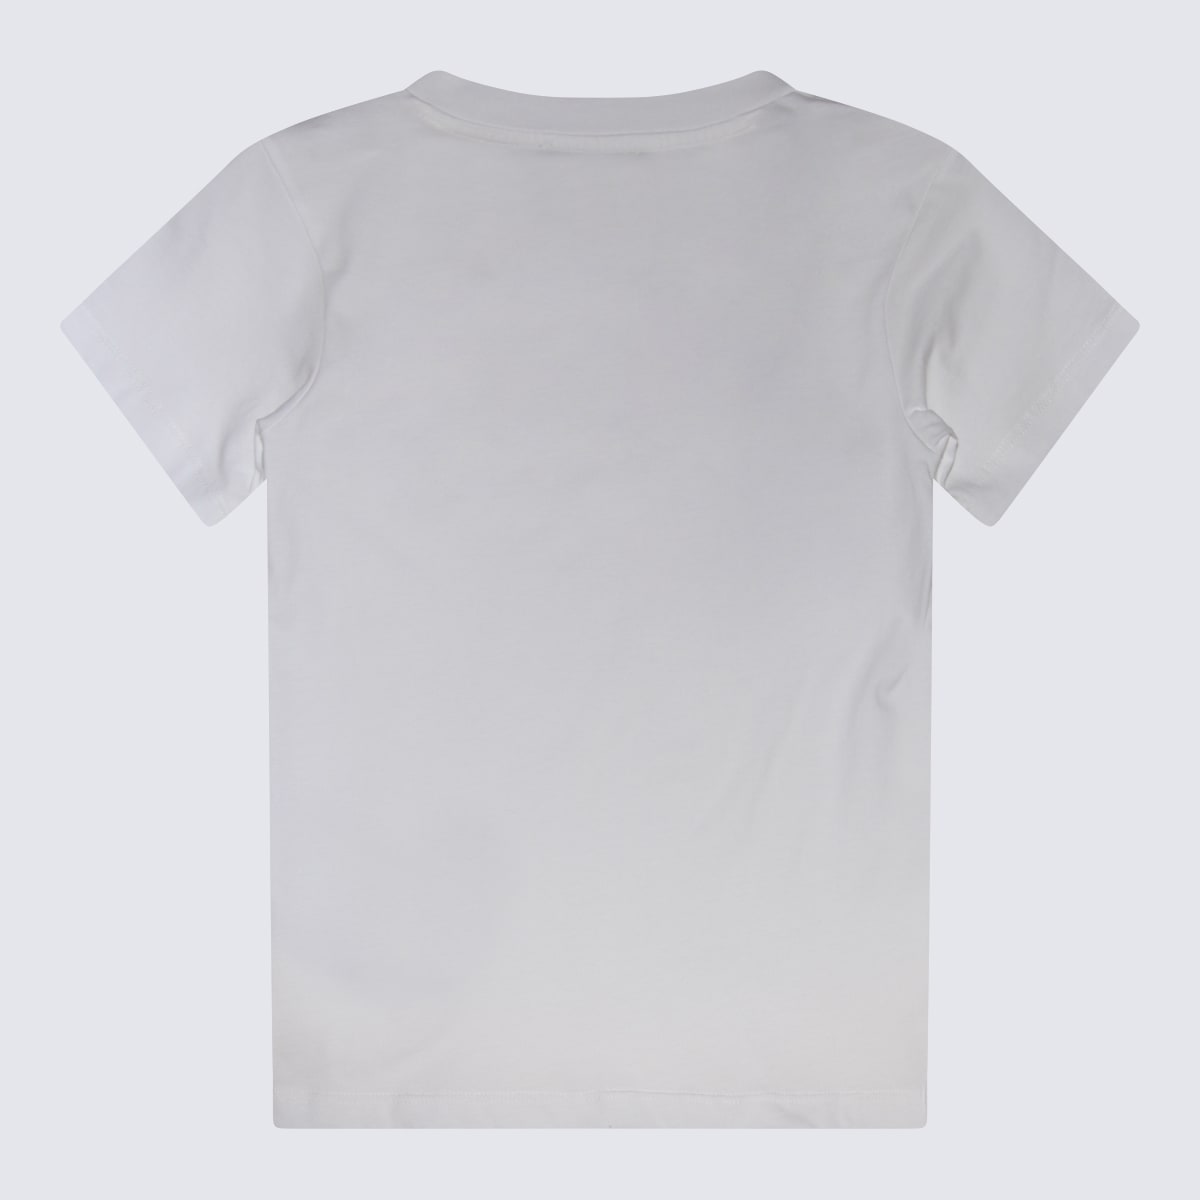 Shop Balmain White And Black Cotton T-shirt